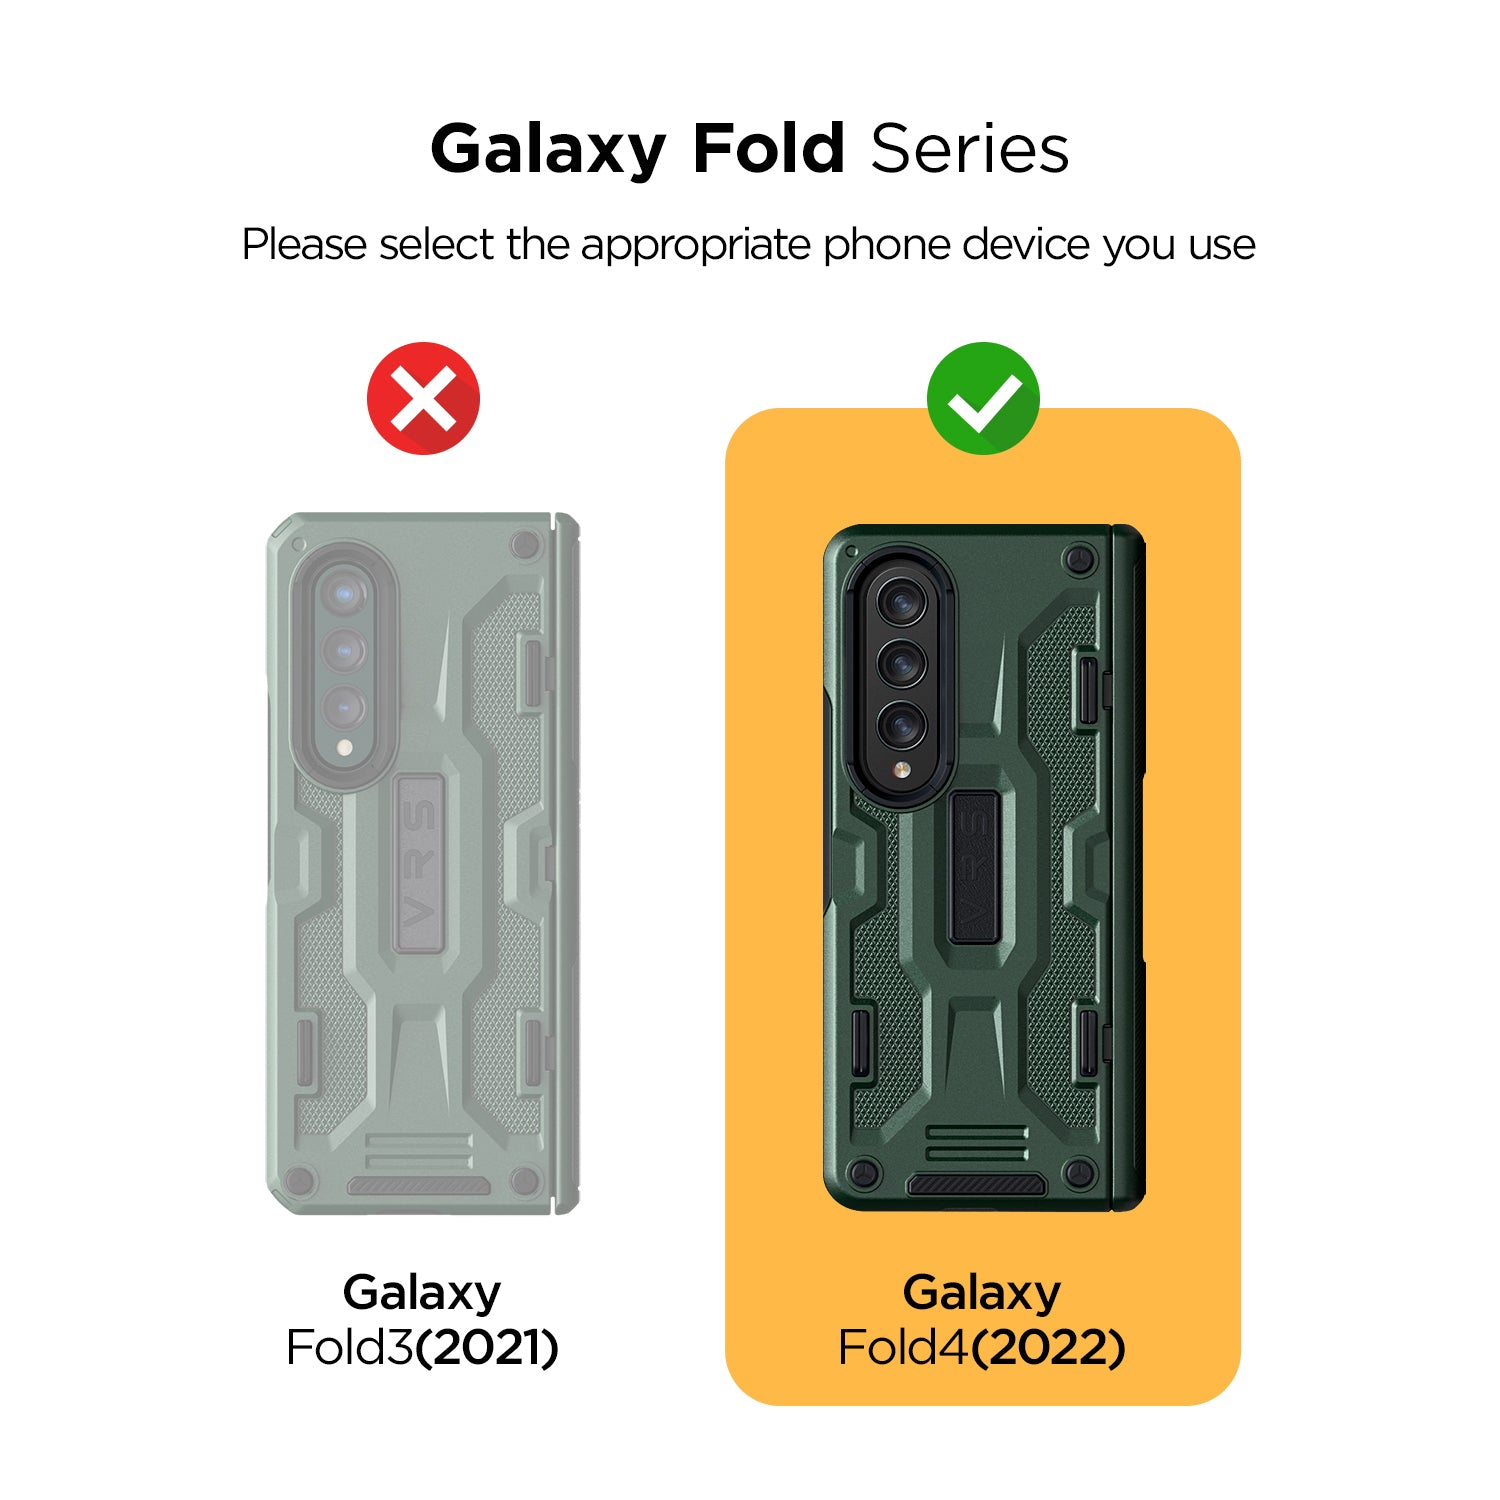 VRS Design Terra Guard Active Case for Samsung Galaxy Z Fold 4 Samsung Case VRS Design 